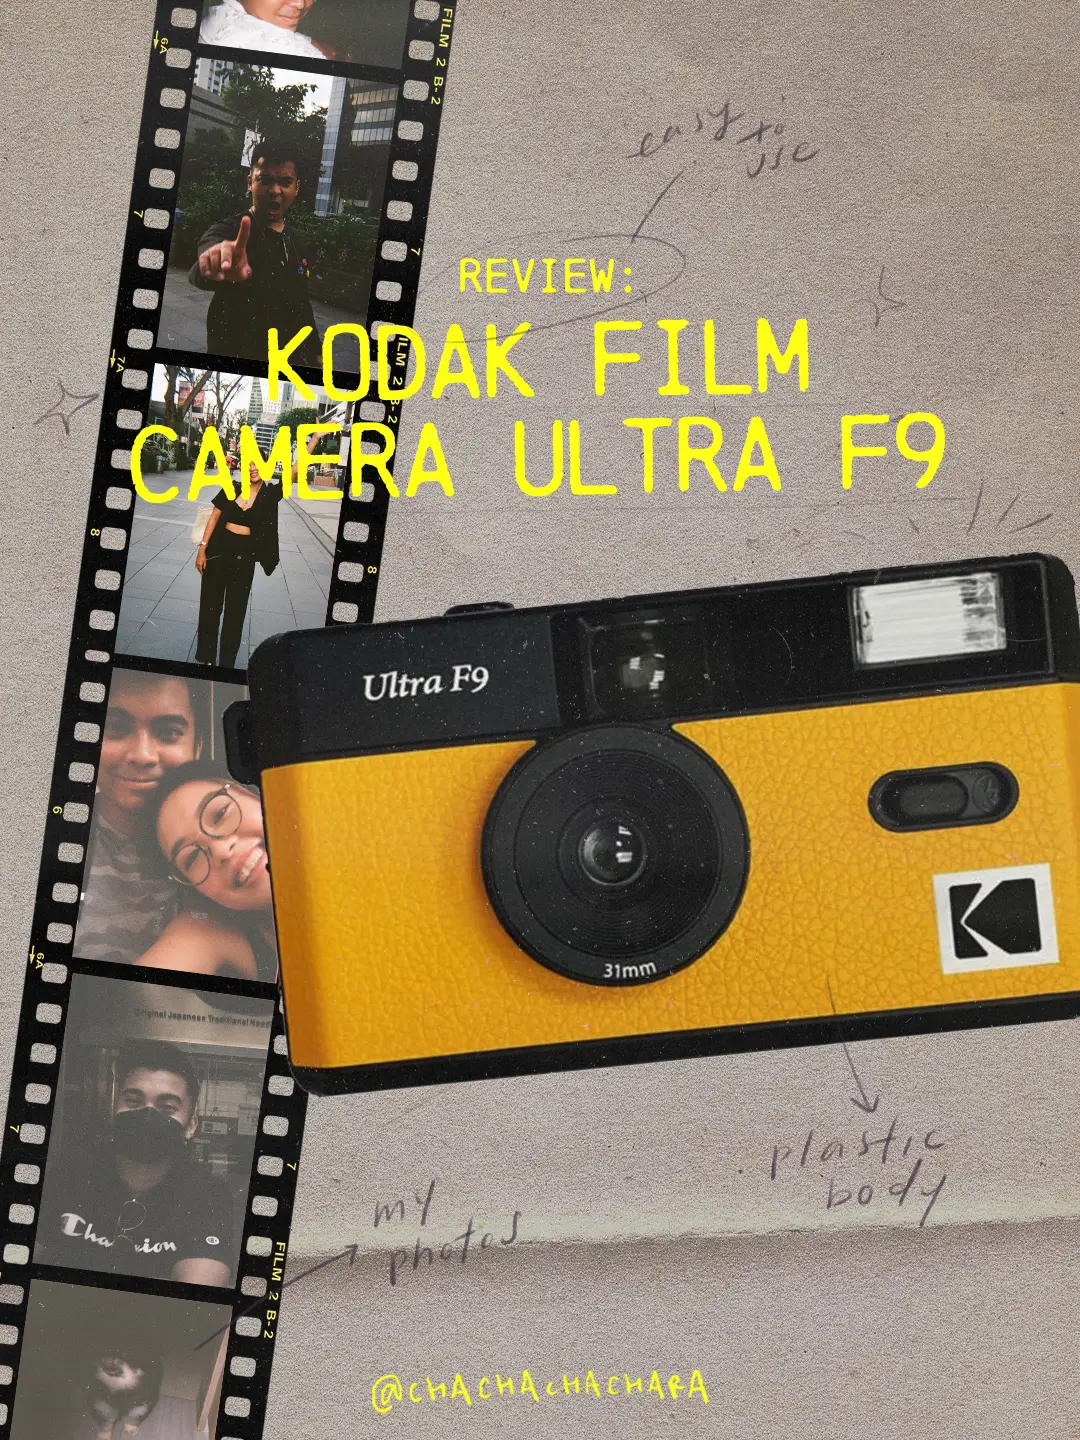 KODAK Film Camera Ultra F9 - Perfect for travel